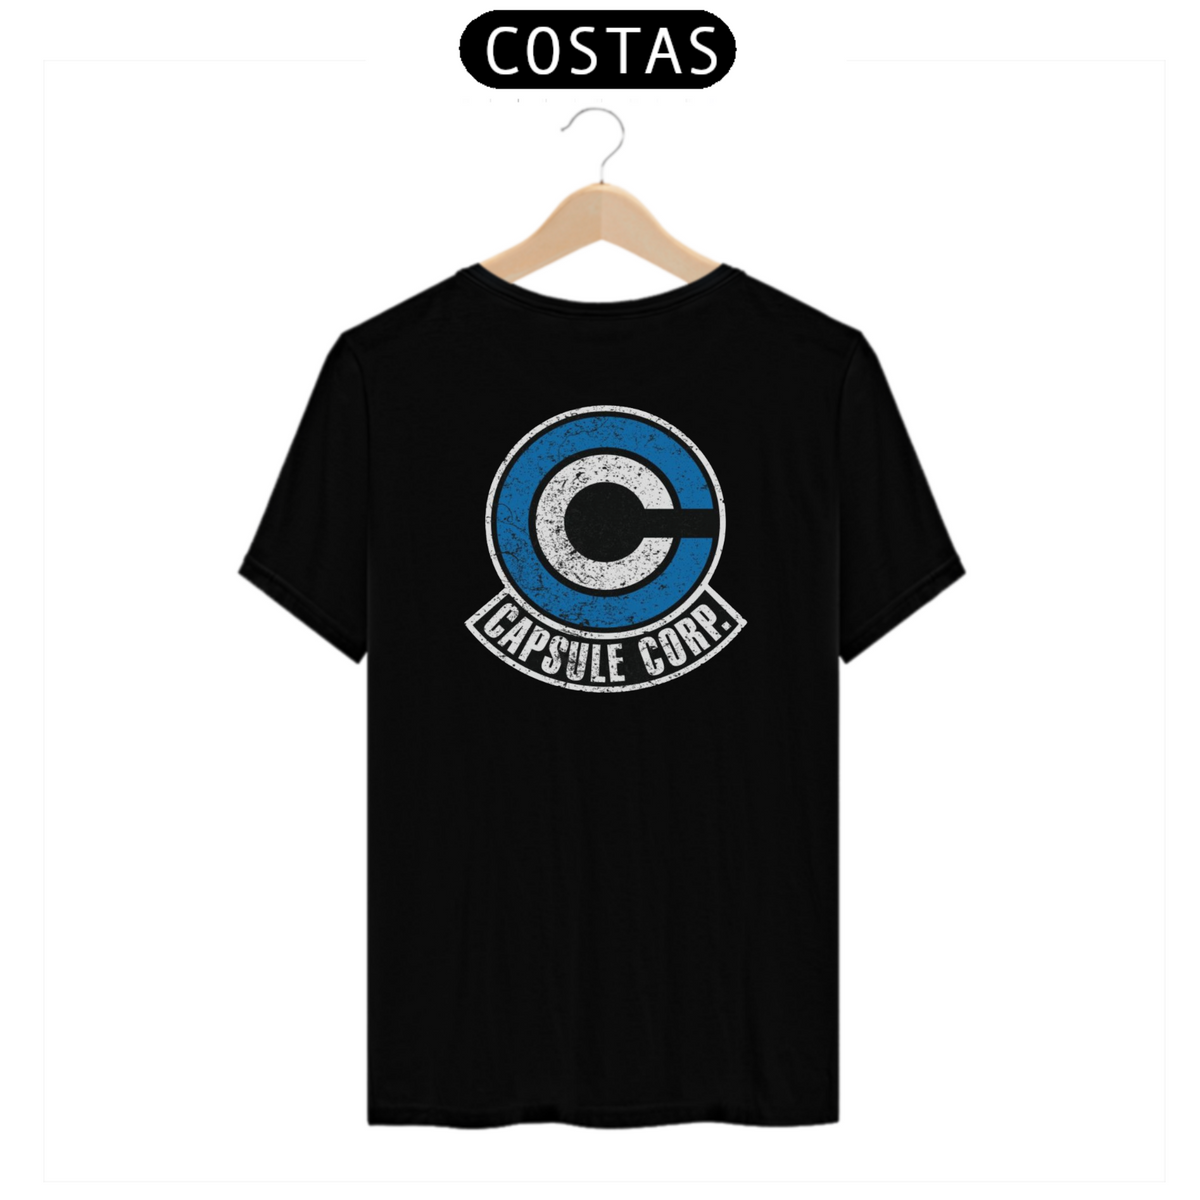 Nome do produto: T-shirt Capsule Corp.